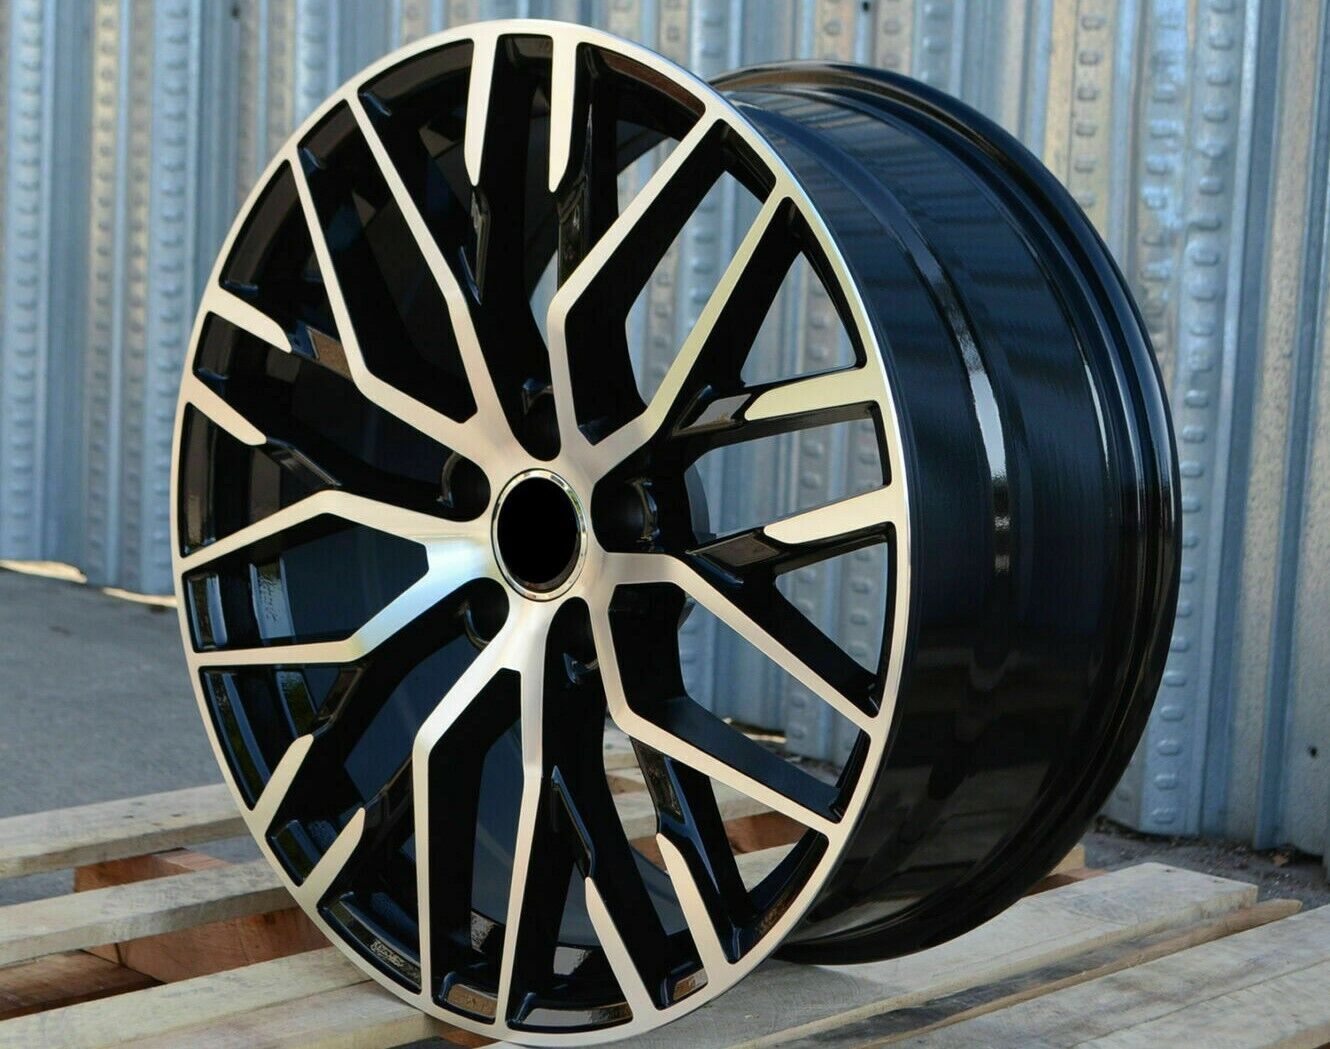 20 Inch Wheels Fits Audi A4 A5 S4 Q5 20x9.0 +32 5x112 Rims Set of 4